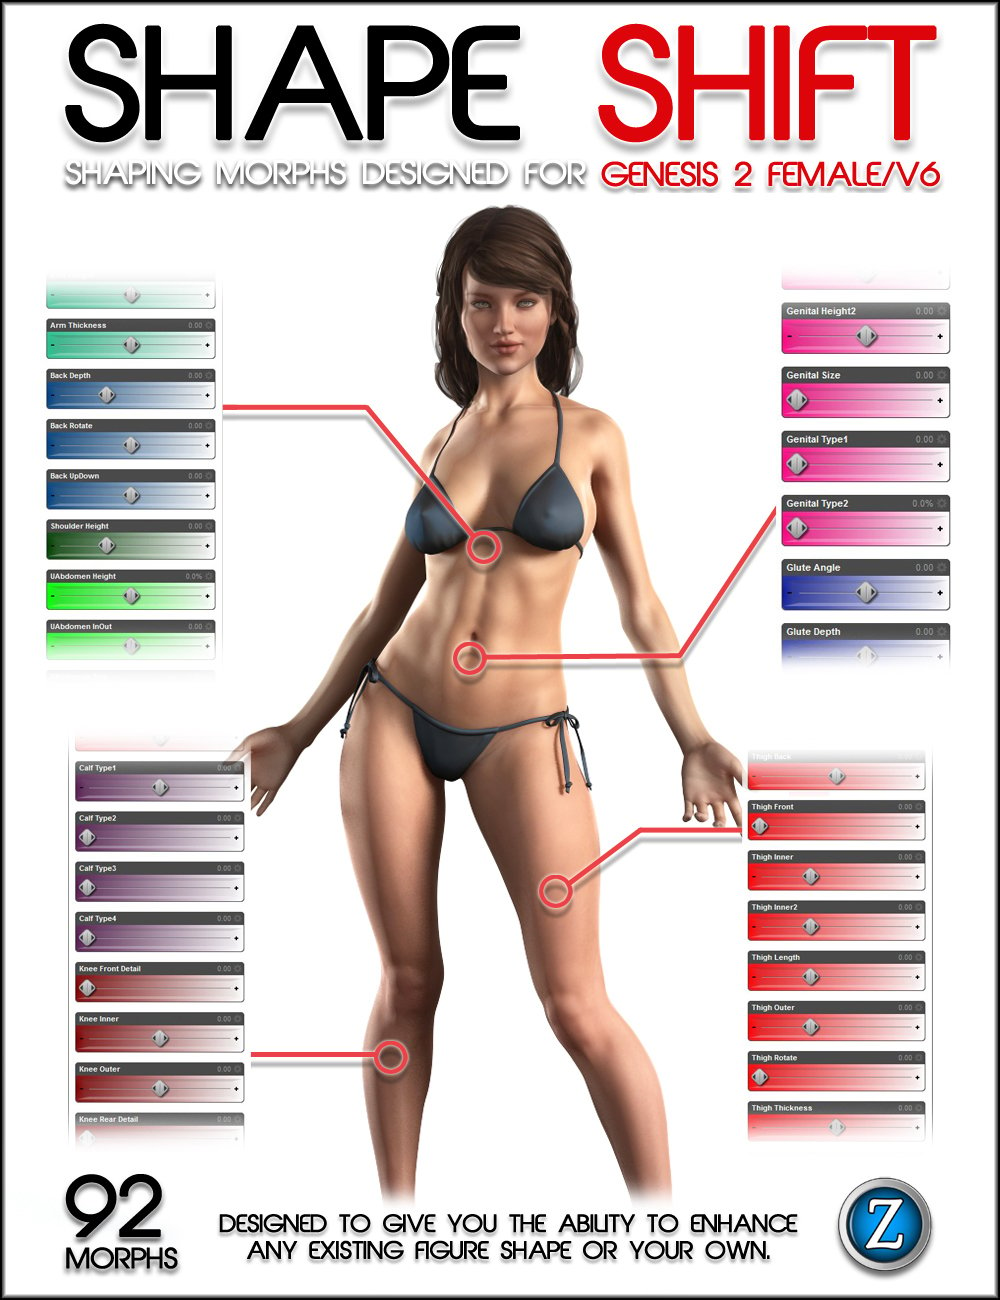 Shape Shift for Genesis 2 Female and V6 by: Zev0, 3D Models by Daz 3D